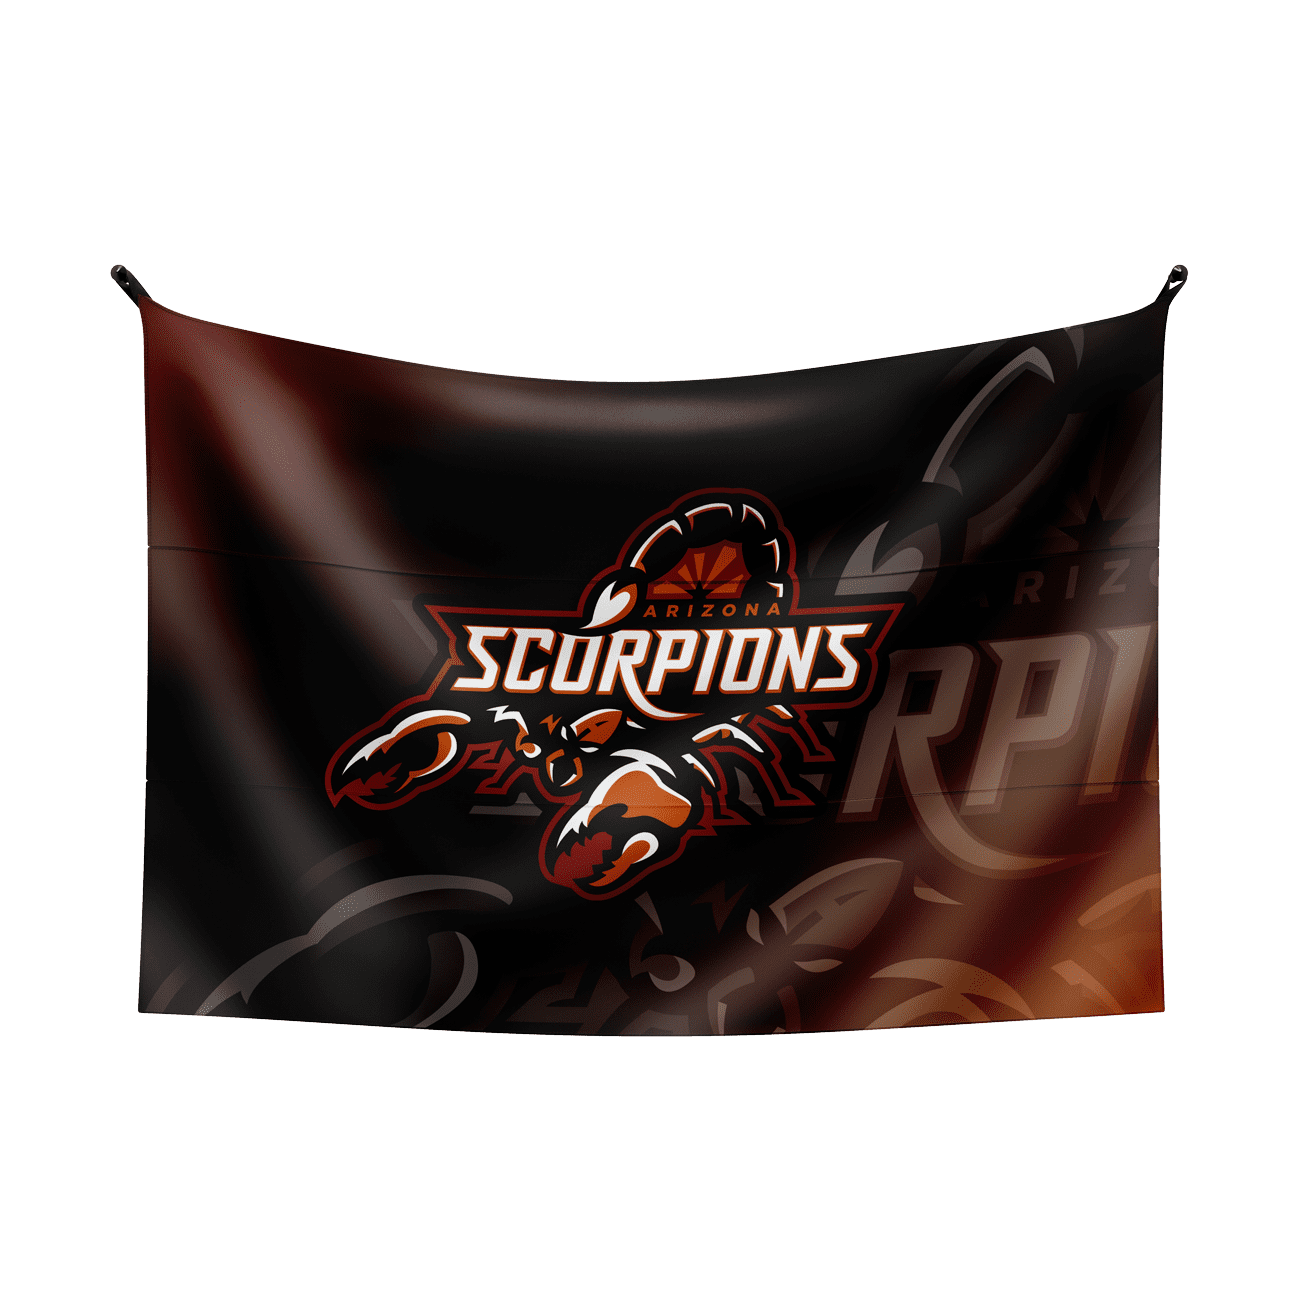 Arizona scorpions Pro Flag